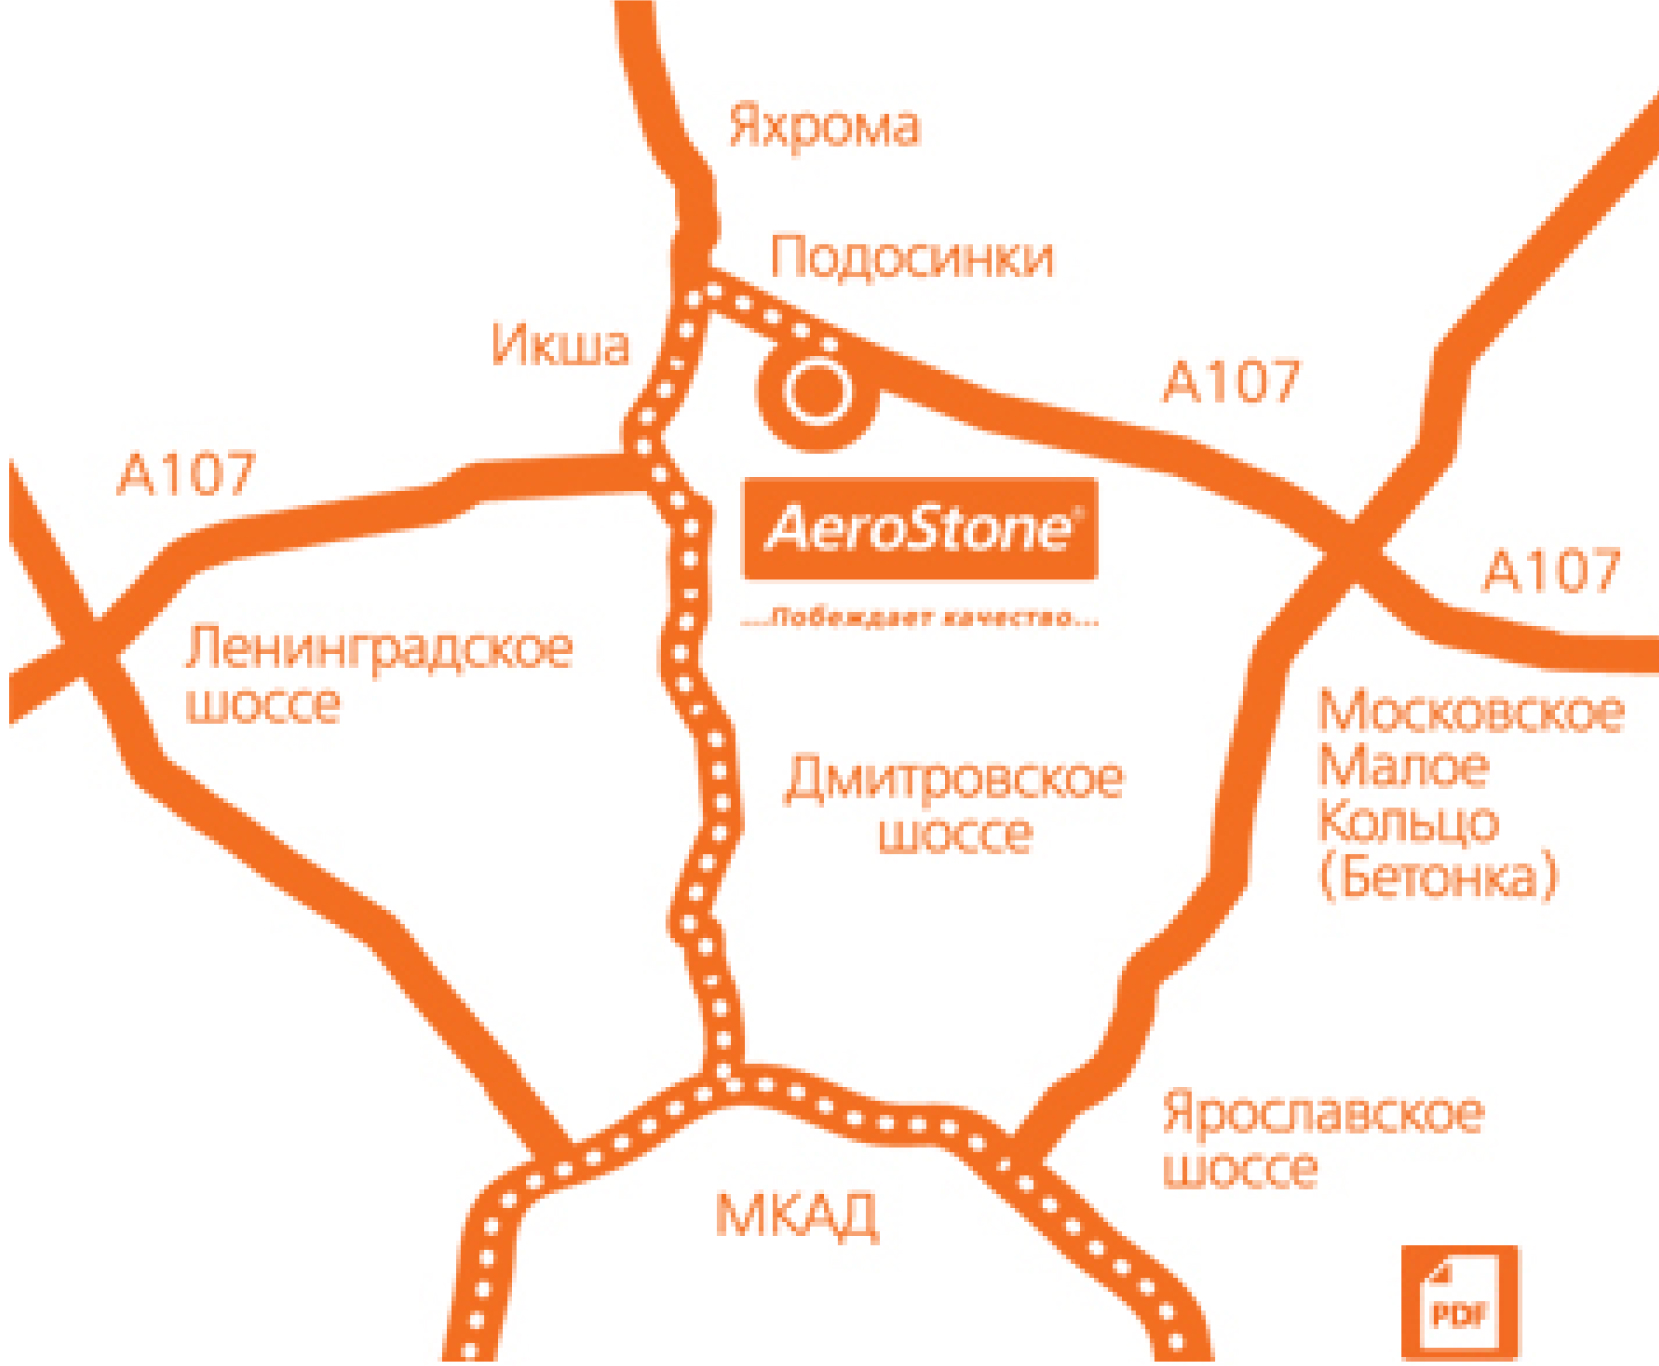 Икша на карте. Бетонка а 107. Малое бетонное кольцо а-107. А-107 Московское Малое кольцо. Московское Малое кольцо а107 на карте.